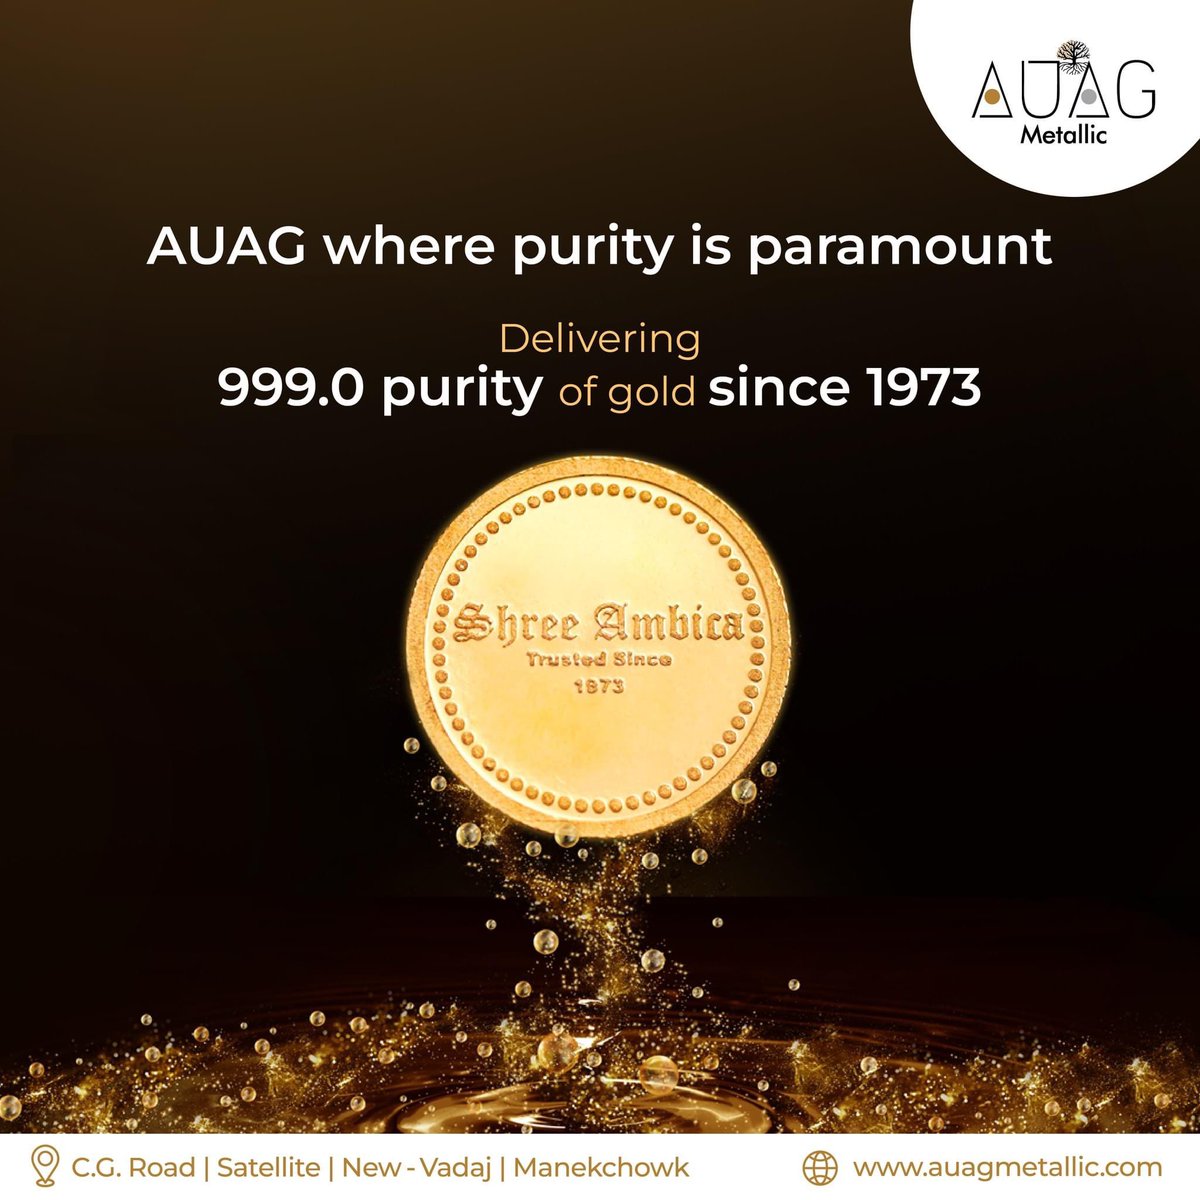 Experience the pinnacle of purity with AUAG - delivering 999.0 gold since 1973. 

#auag #auagmetallic #gold #goldcoins #goldbars #purestquality #puregold #trustedplatform #preciousmetal #doorstepdelivery #secureoption #buynow #cgroad #manekchowk #newvadaj #satellite #ahmedabad